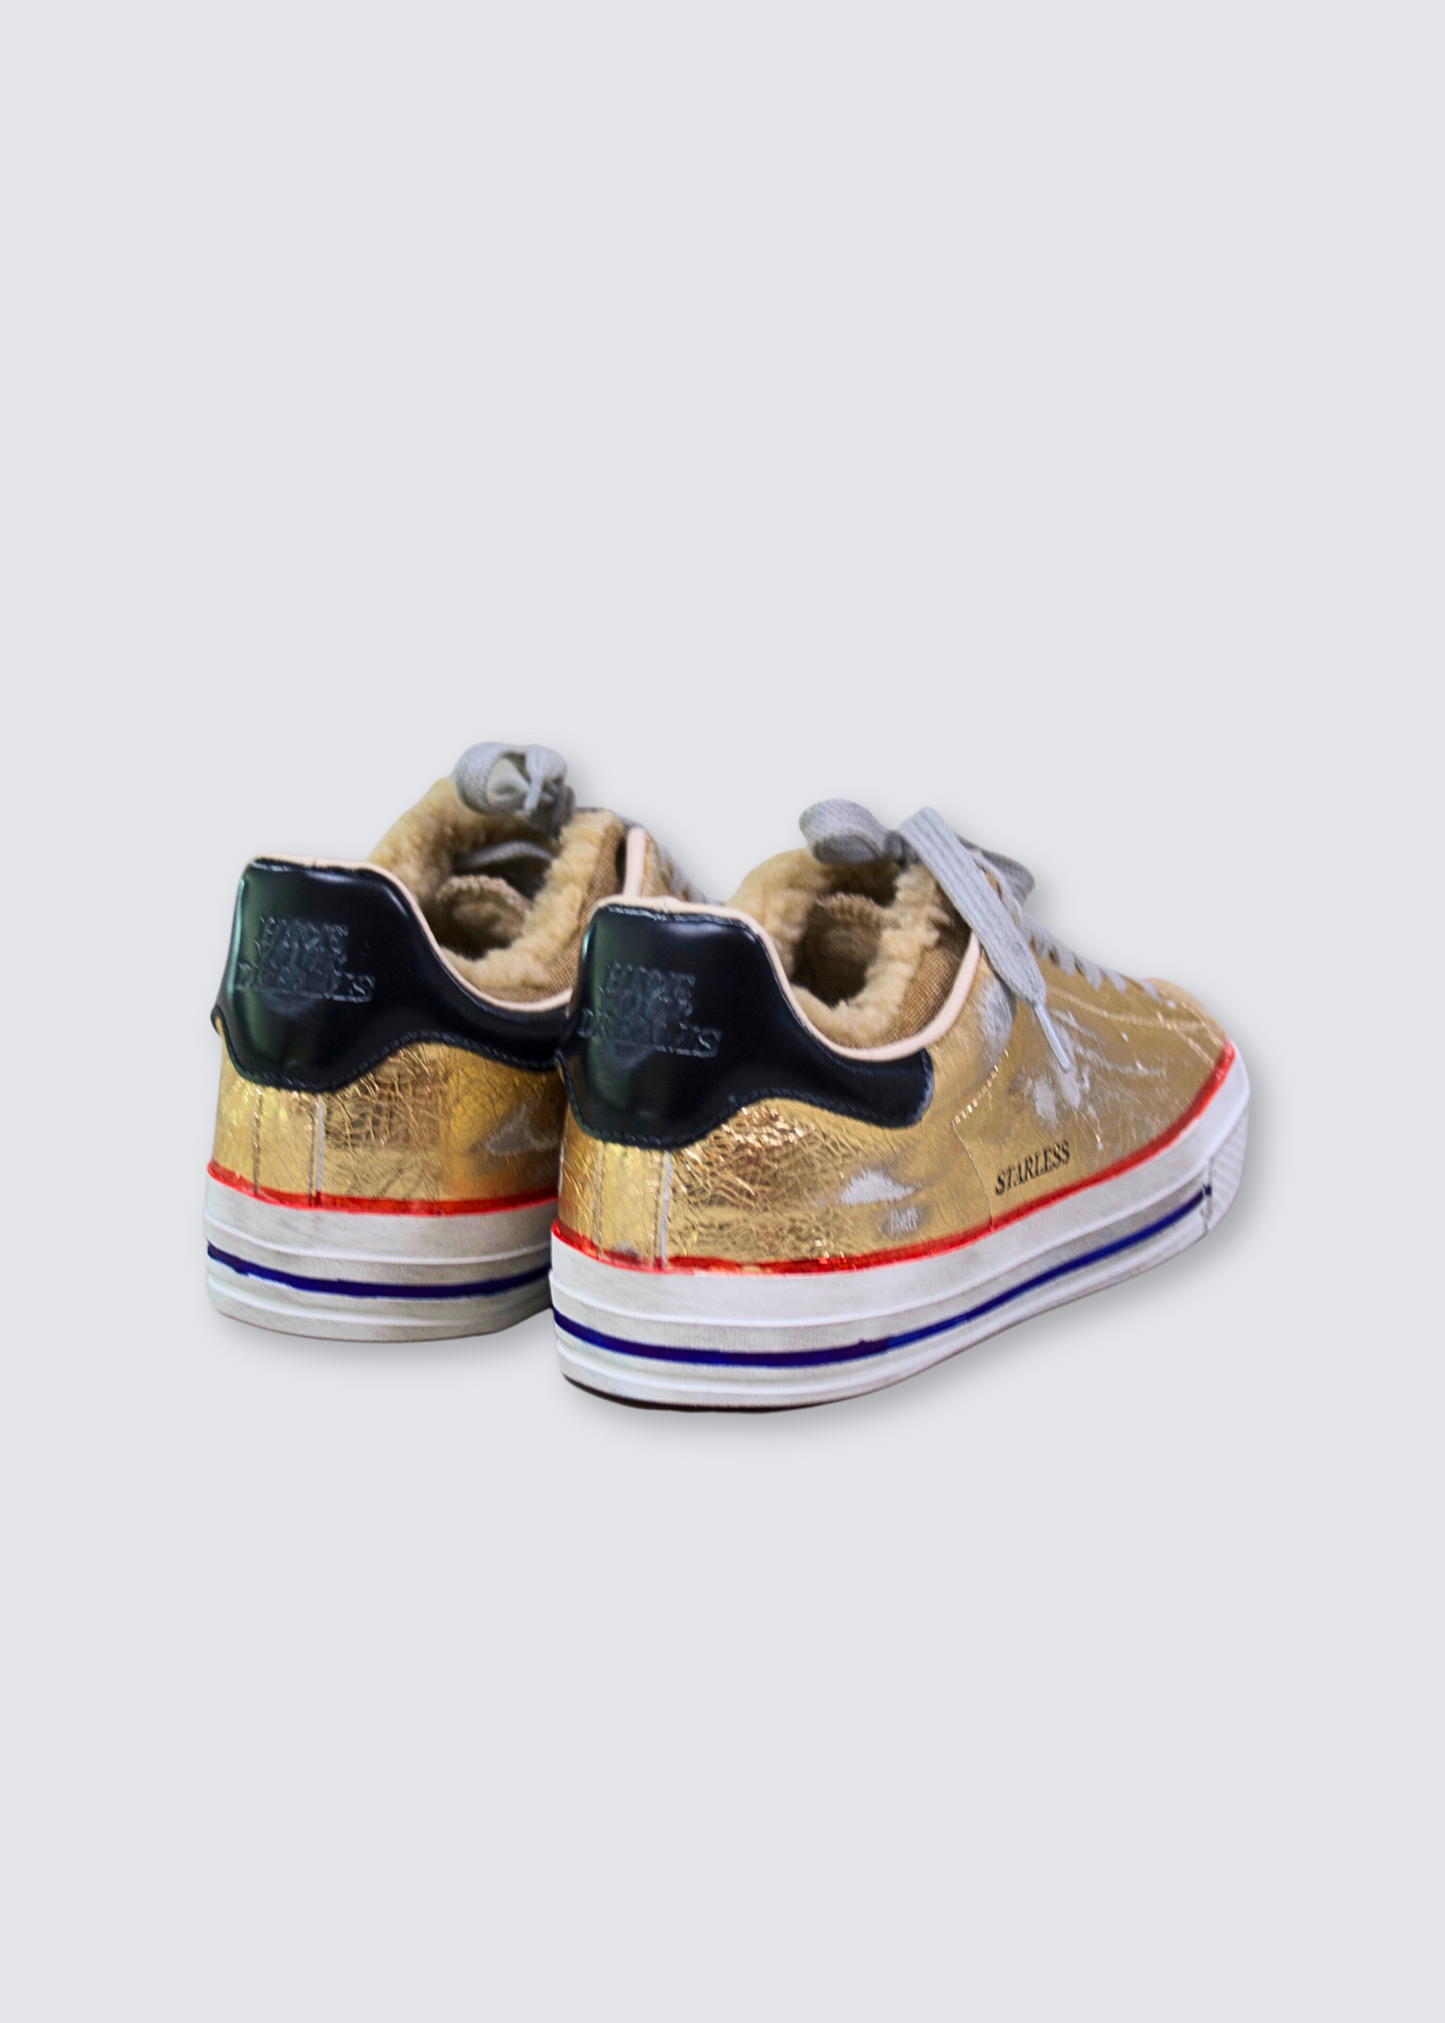 Starless Low Shear, Gold/Khaki, Sneaker